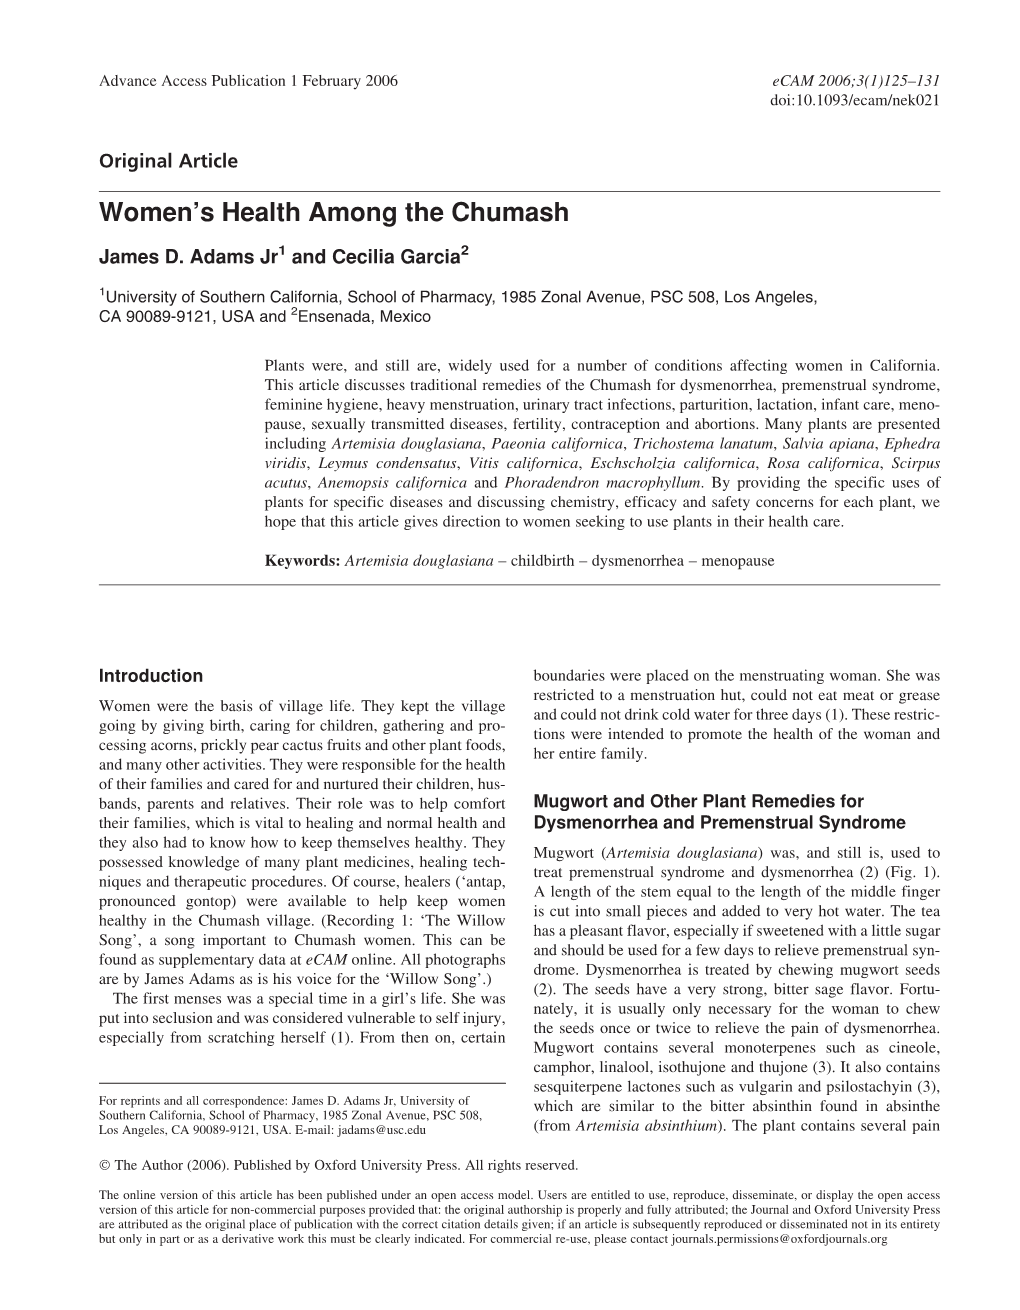 Women's Health Among the Chumash